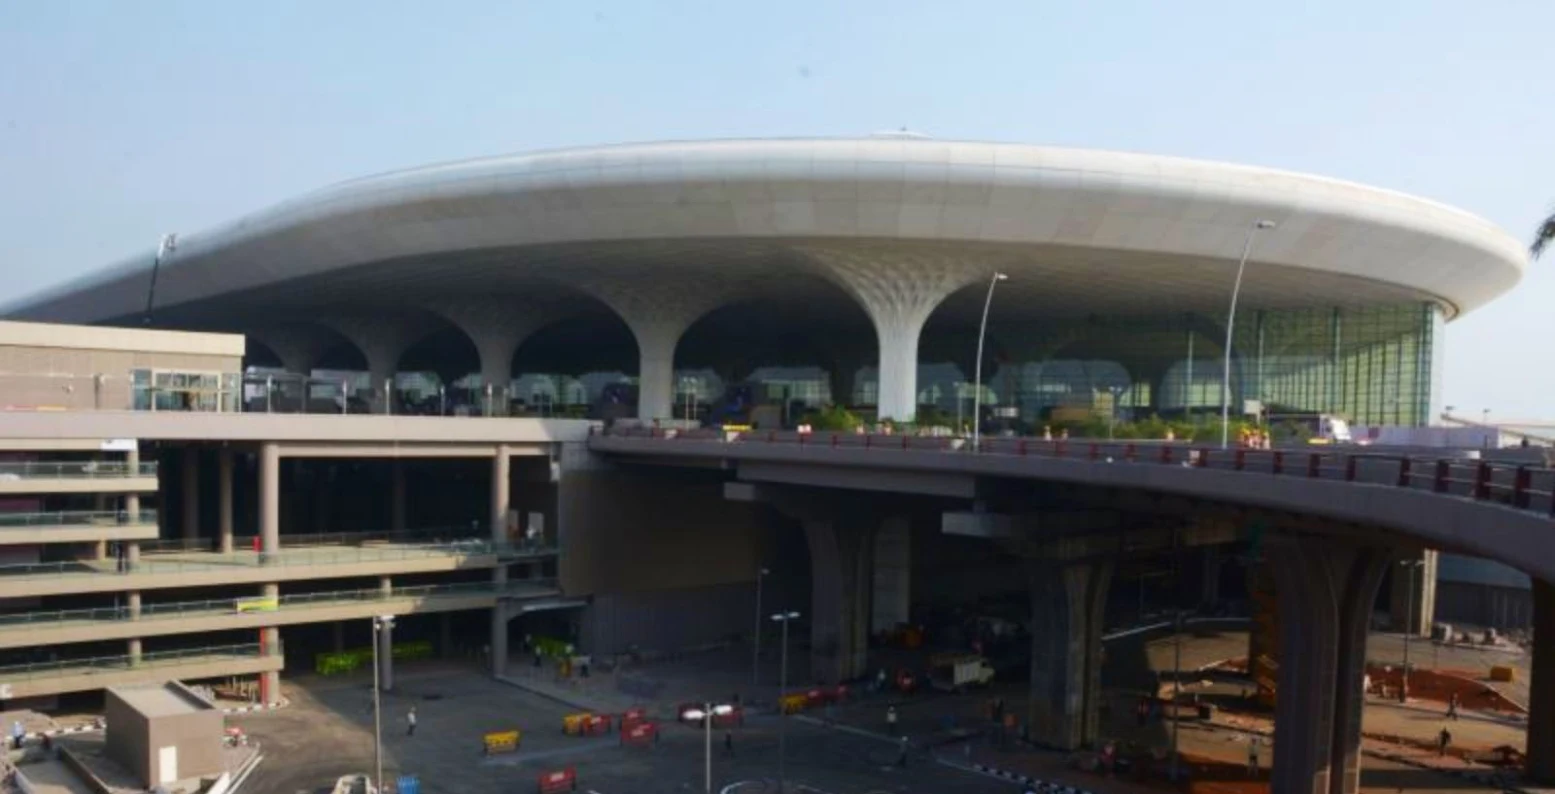 Open the Chhatrapati Shivaji International Airport by SOM